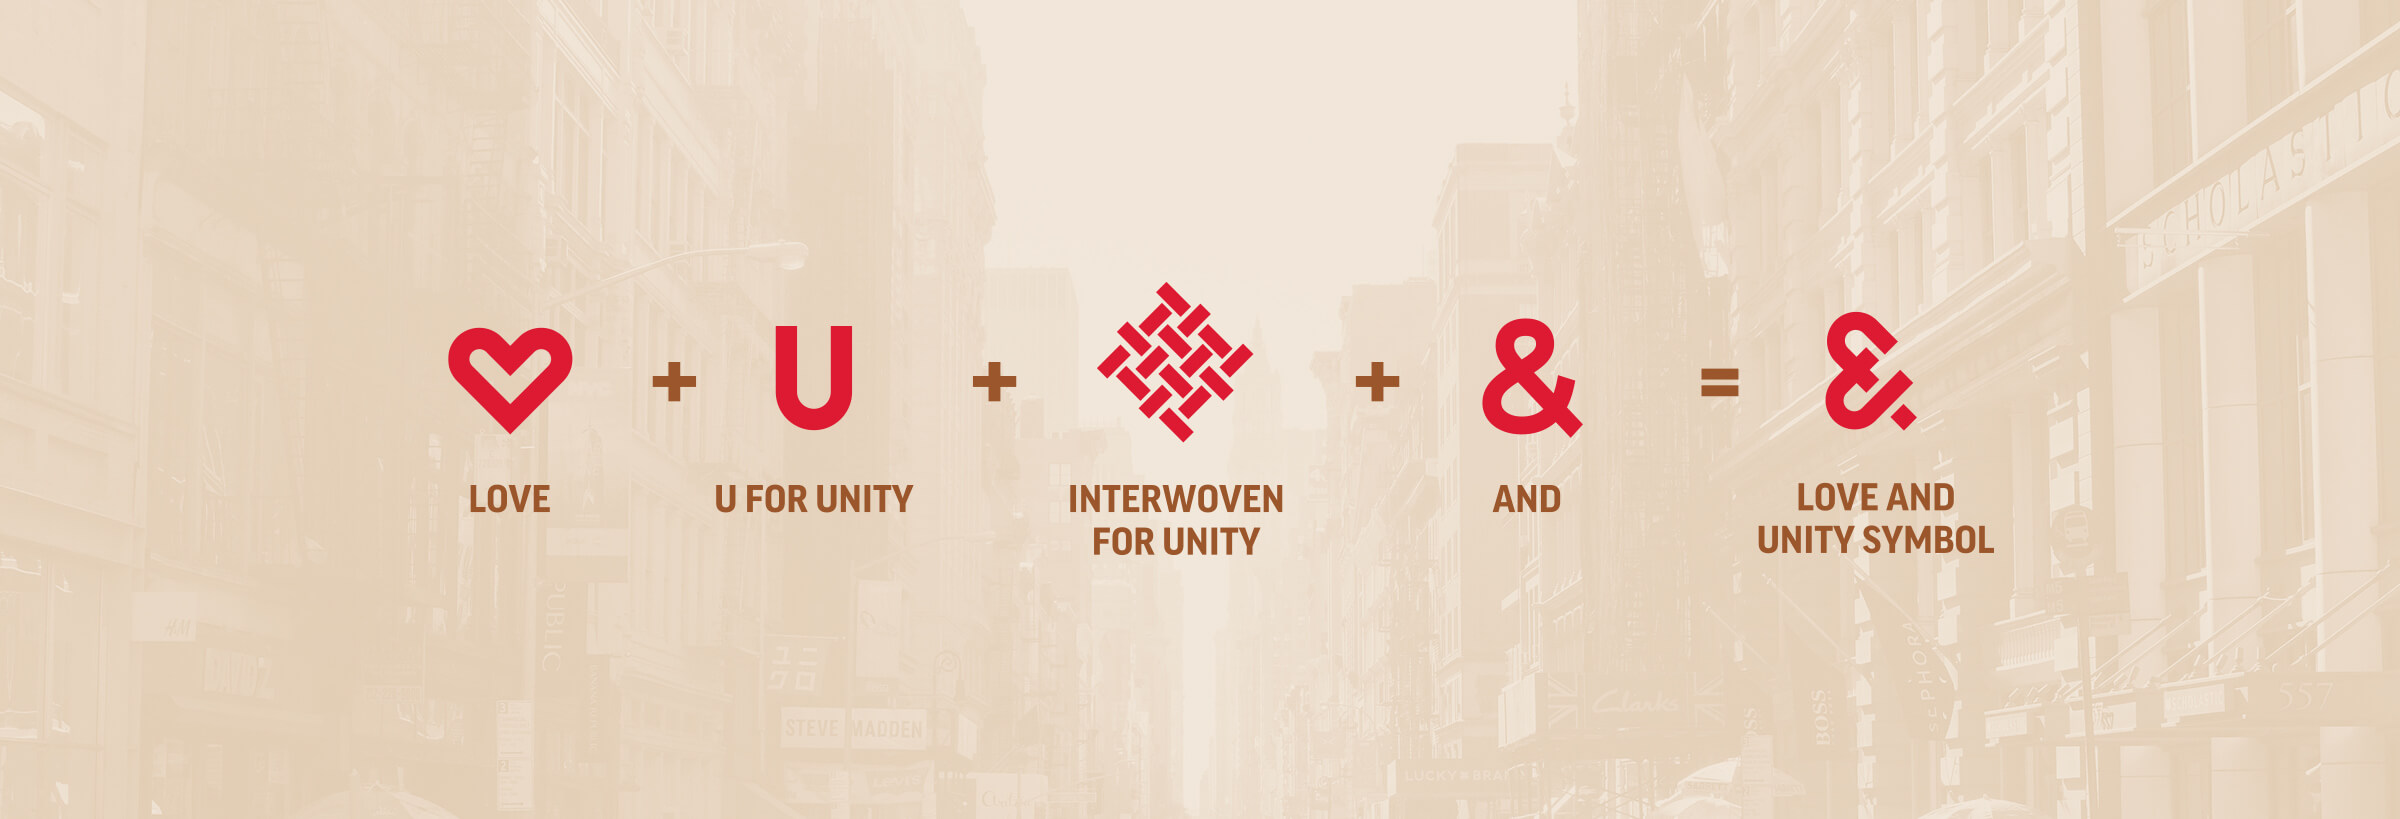 Love and Unity logo construction